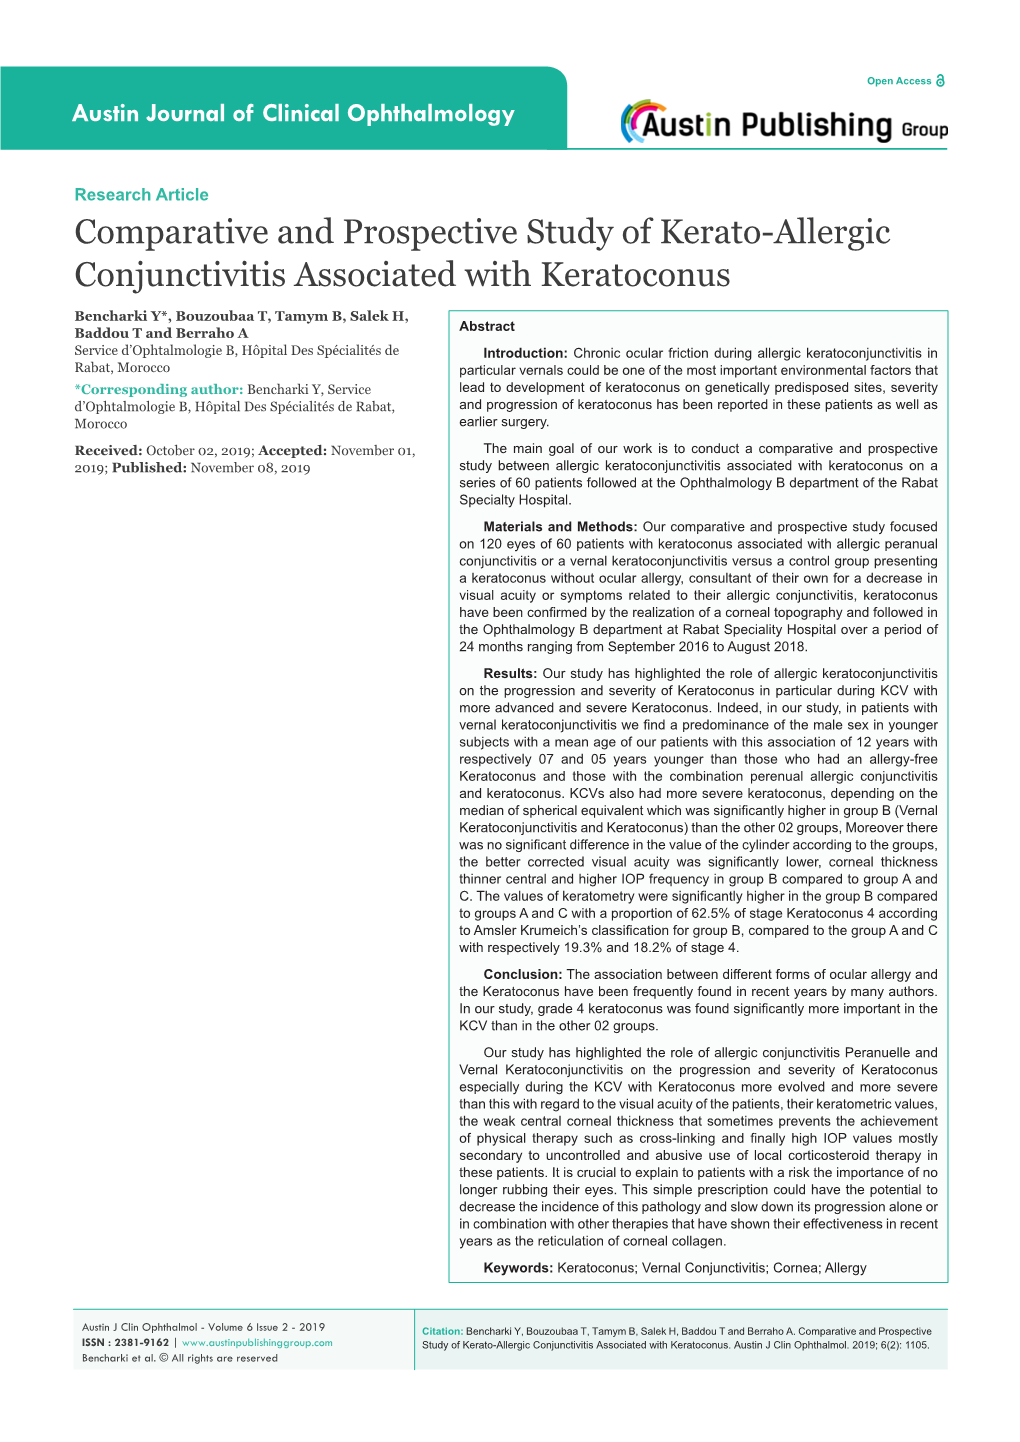 Comparative and Prospective Study of Kerato-Allergic Conjunctivitis Associated with Keratoconus